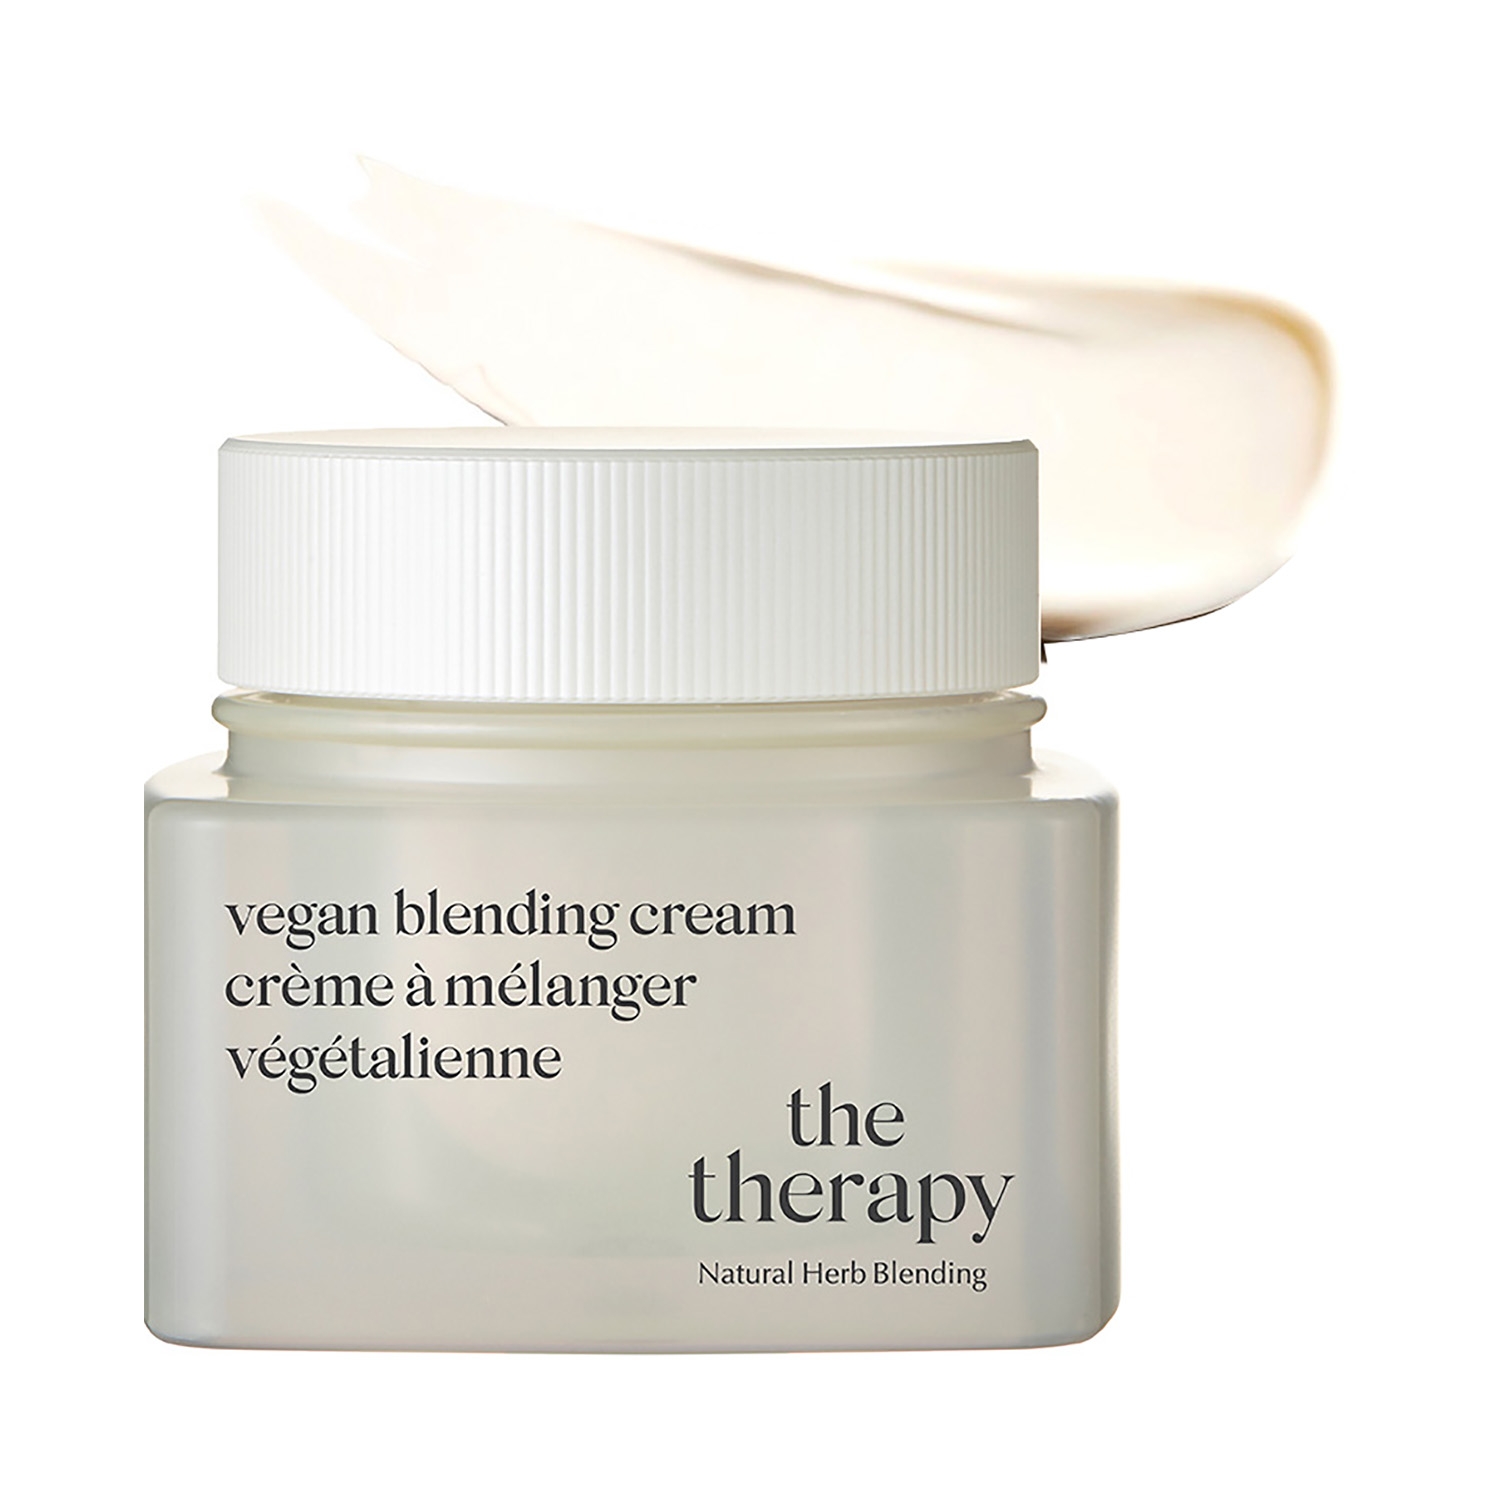 The Face Shop | The Face Shop The Therapy Vegan Blending Cream (60ml)